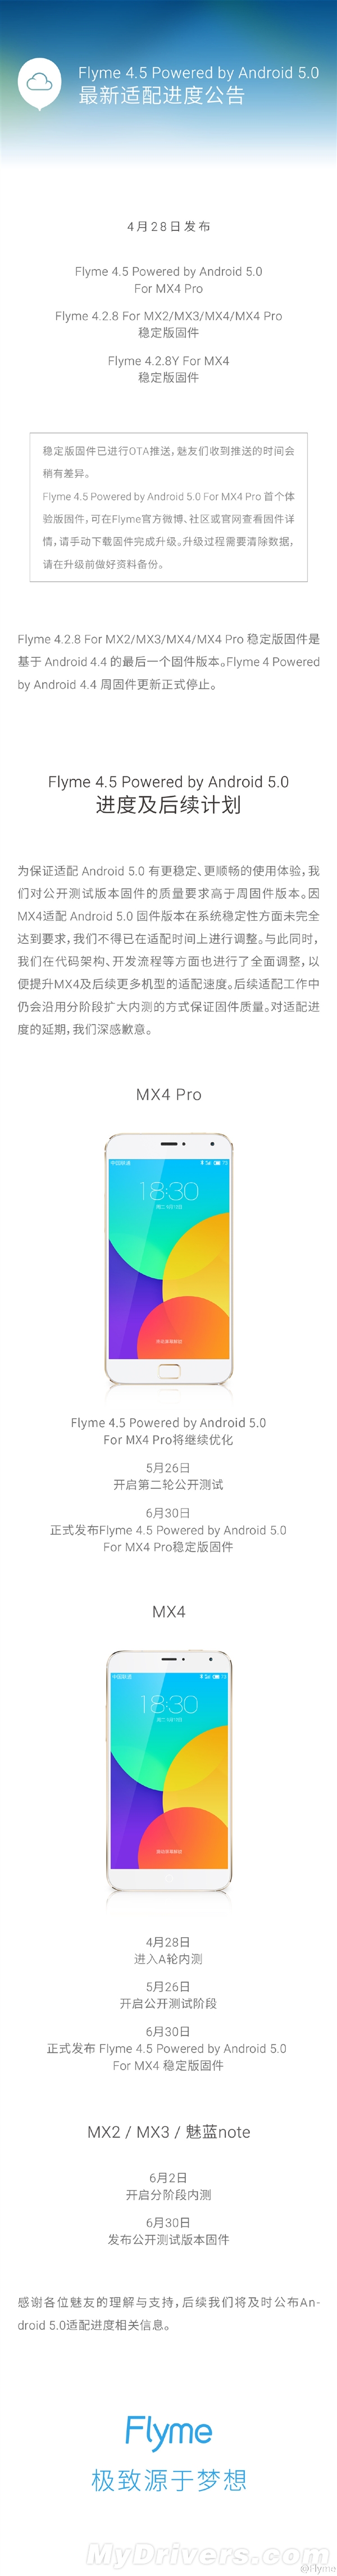 Android 5.0版Flyme今日推出 MX4 Pro可体验